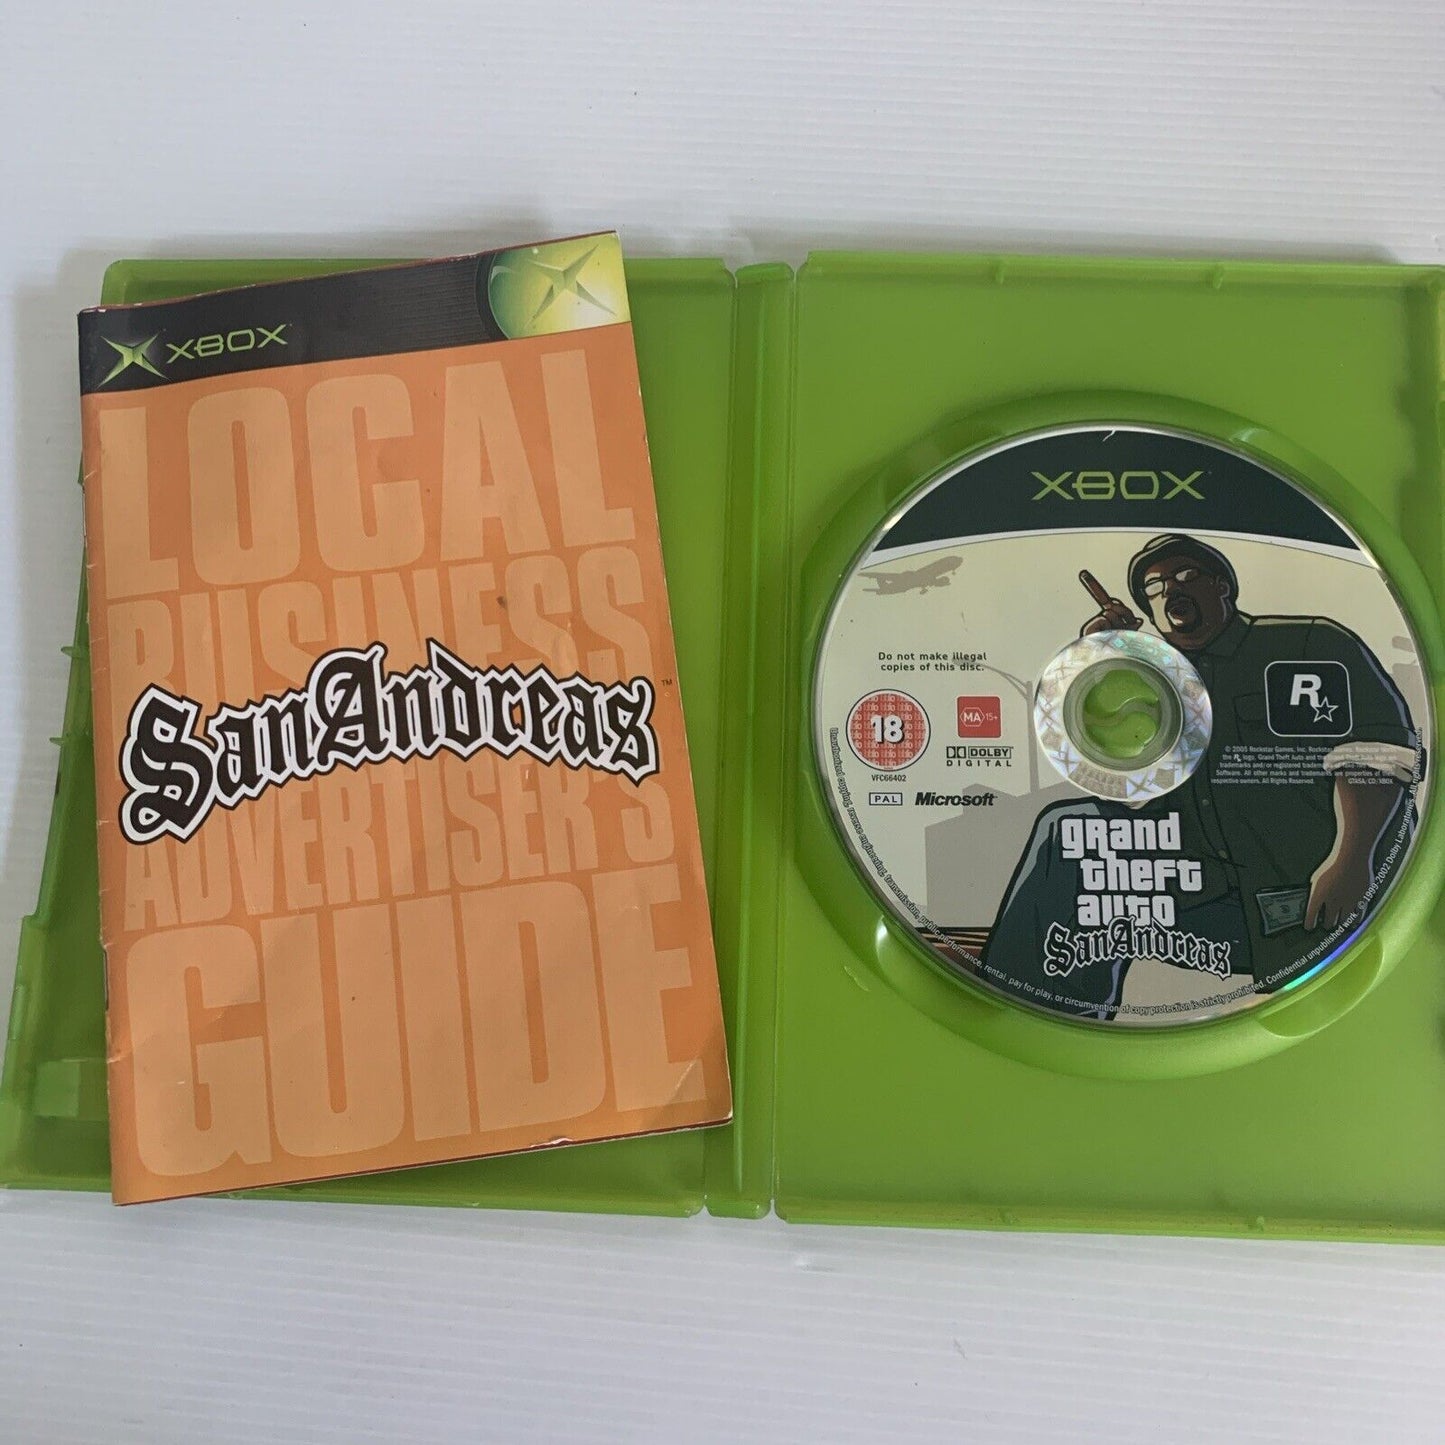 Grand Theft Auto San Andreas Xbox Original Game